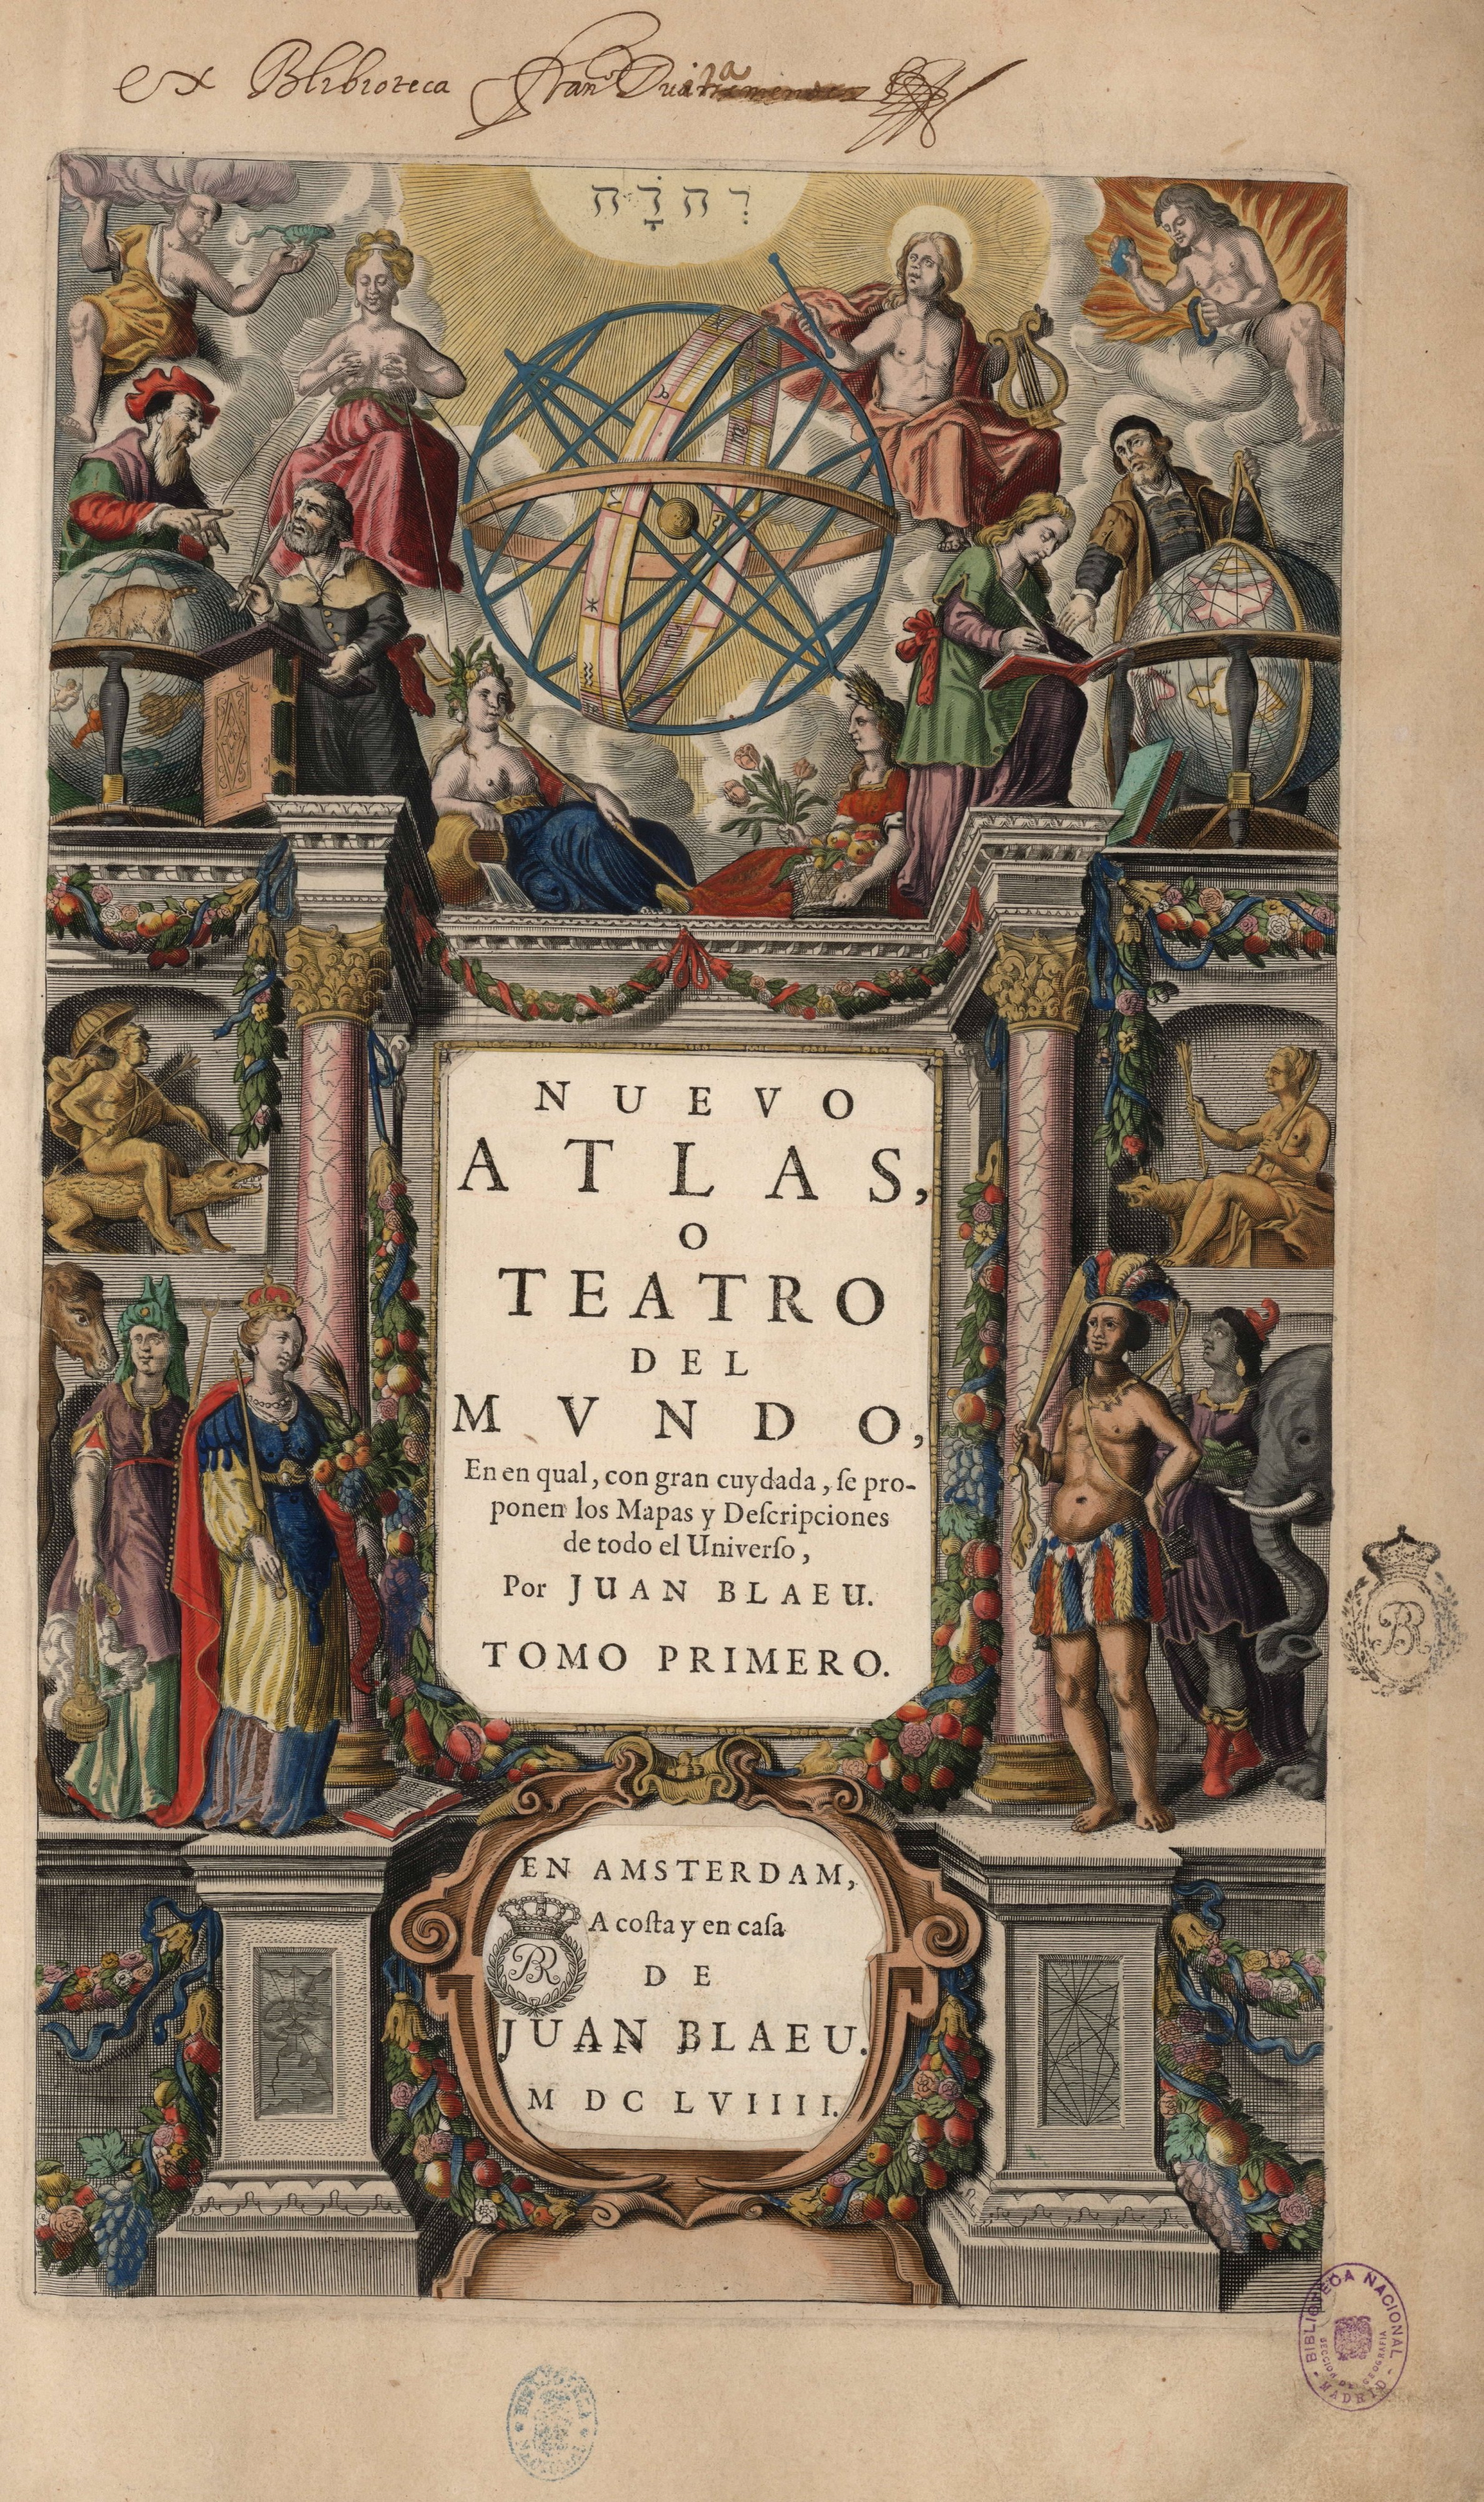 Nuevo Atlas o Teatro Mundo - 1664 title page of spanish edition of Joan Blaeu's atlas